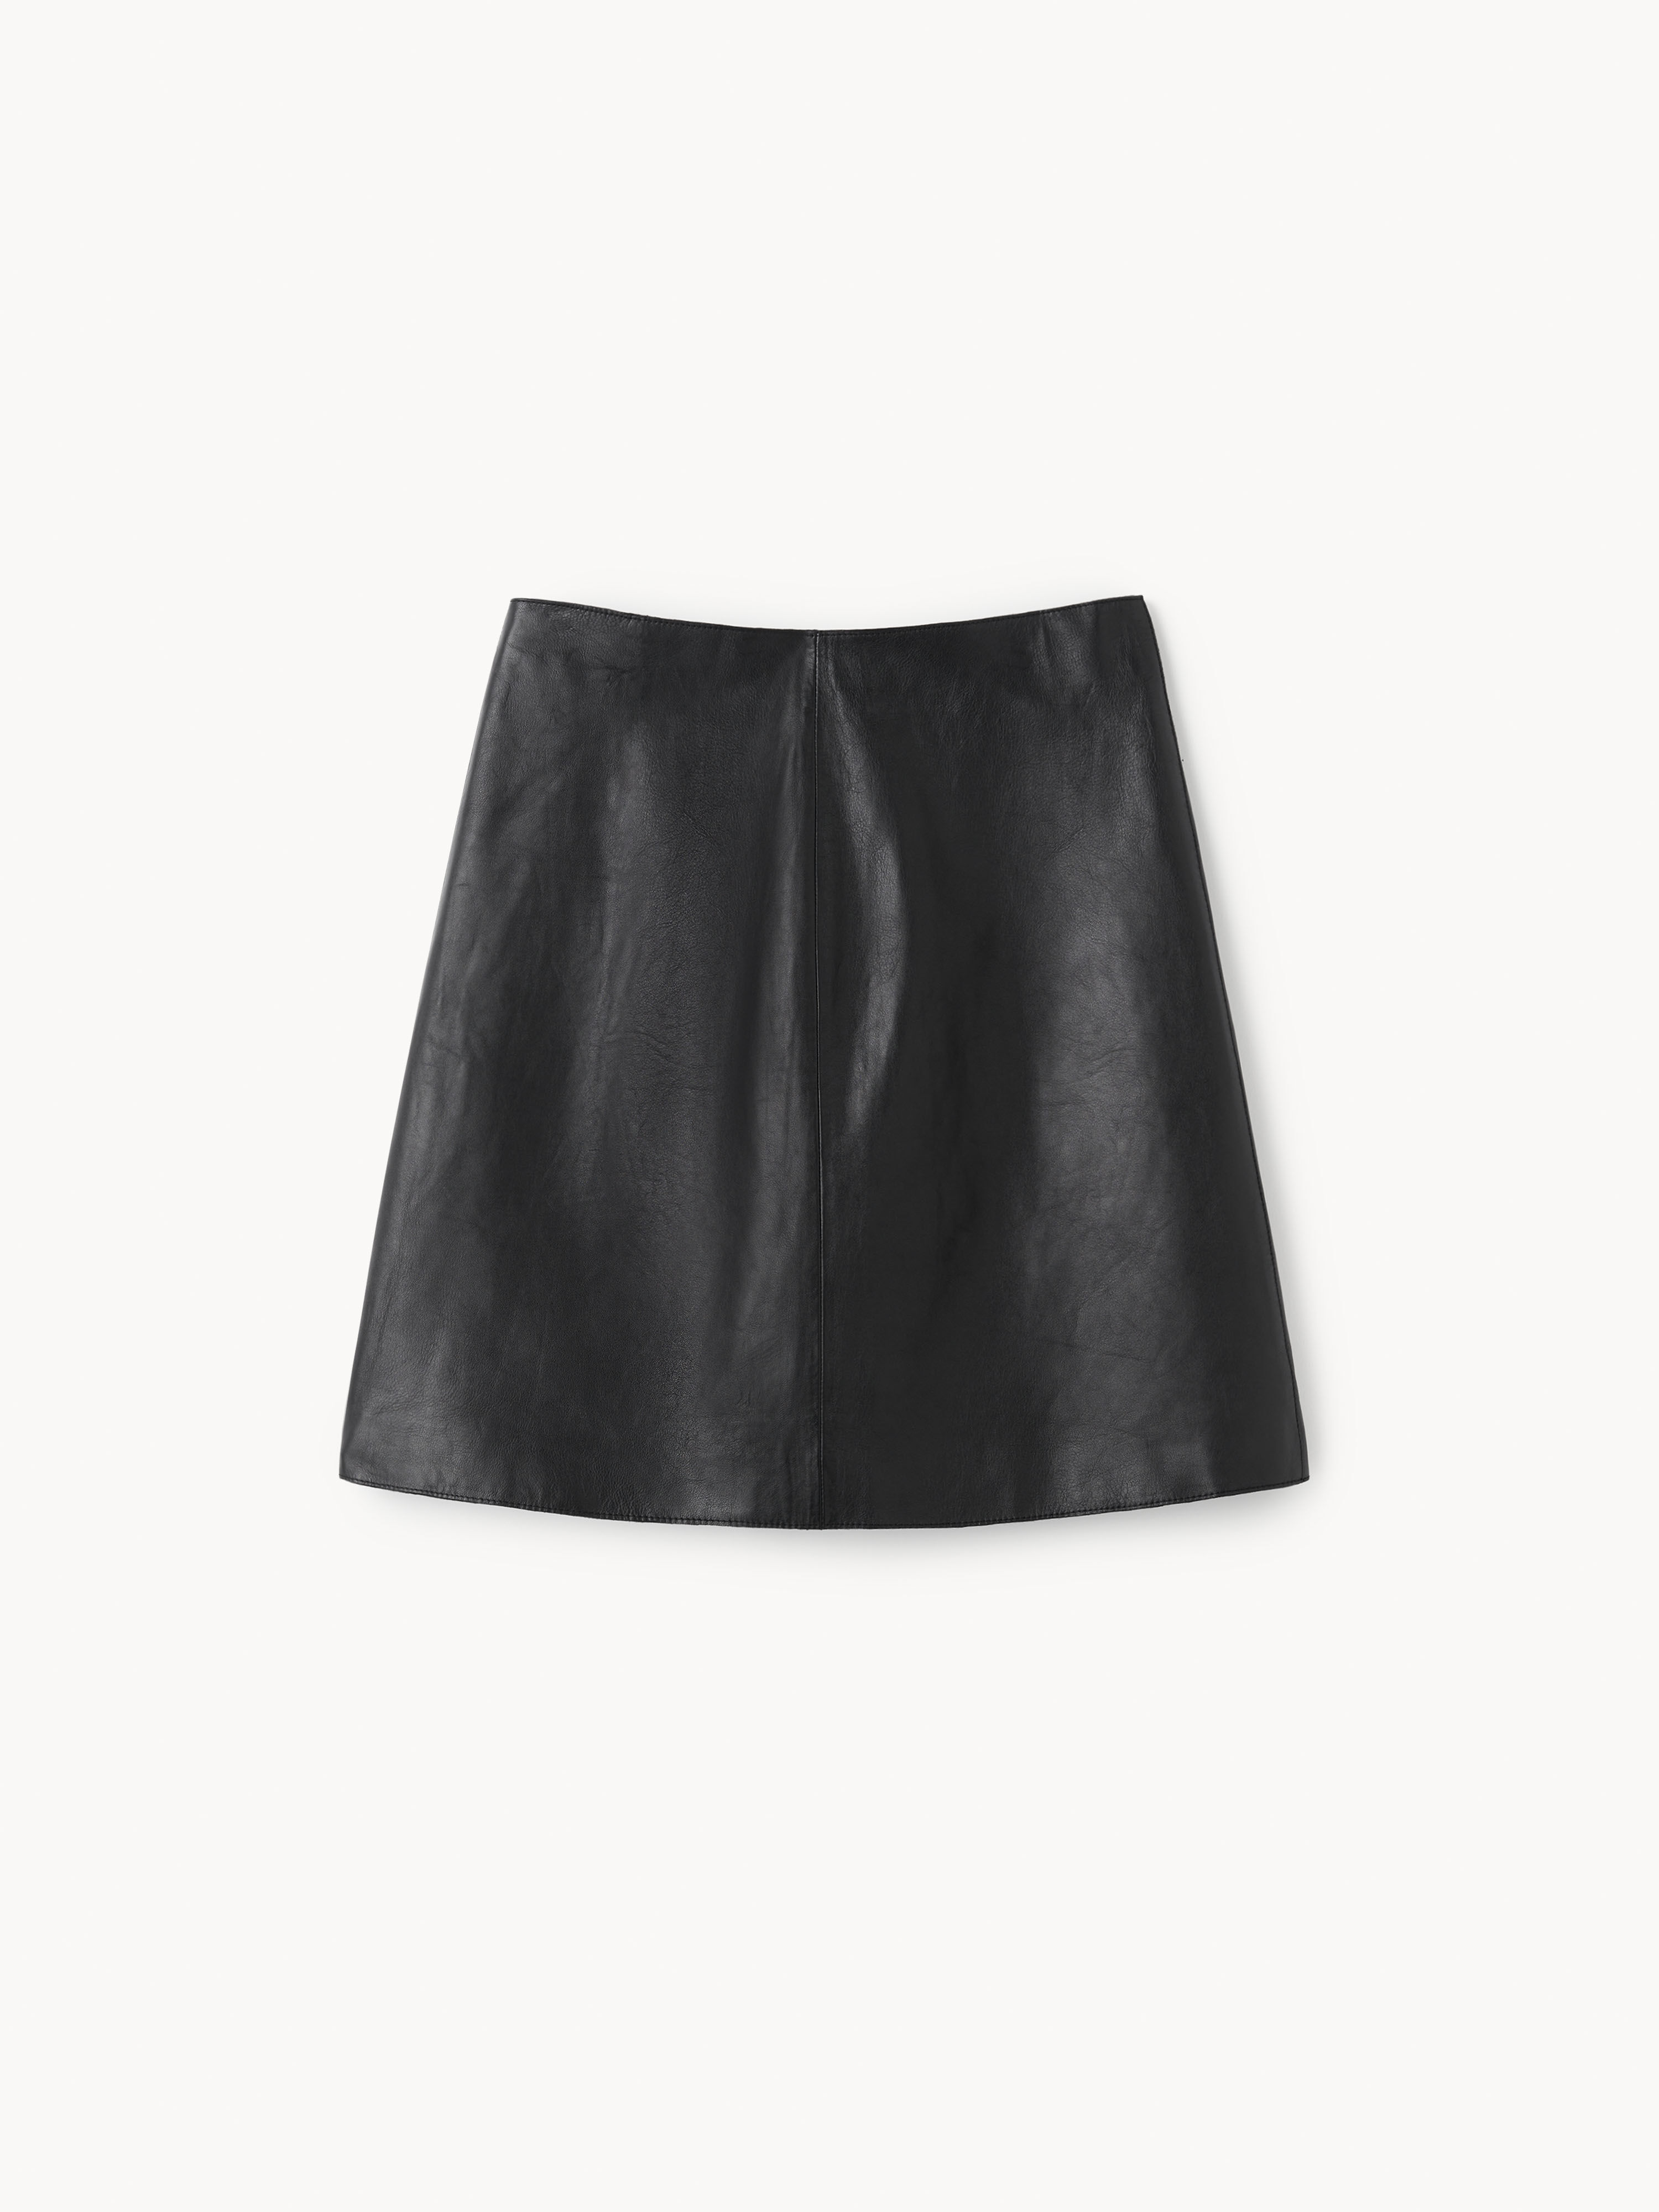 COLLUSION PU full circle skirt in black | ASOS